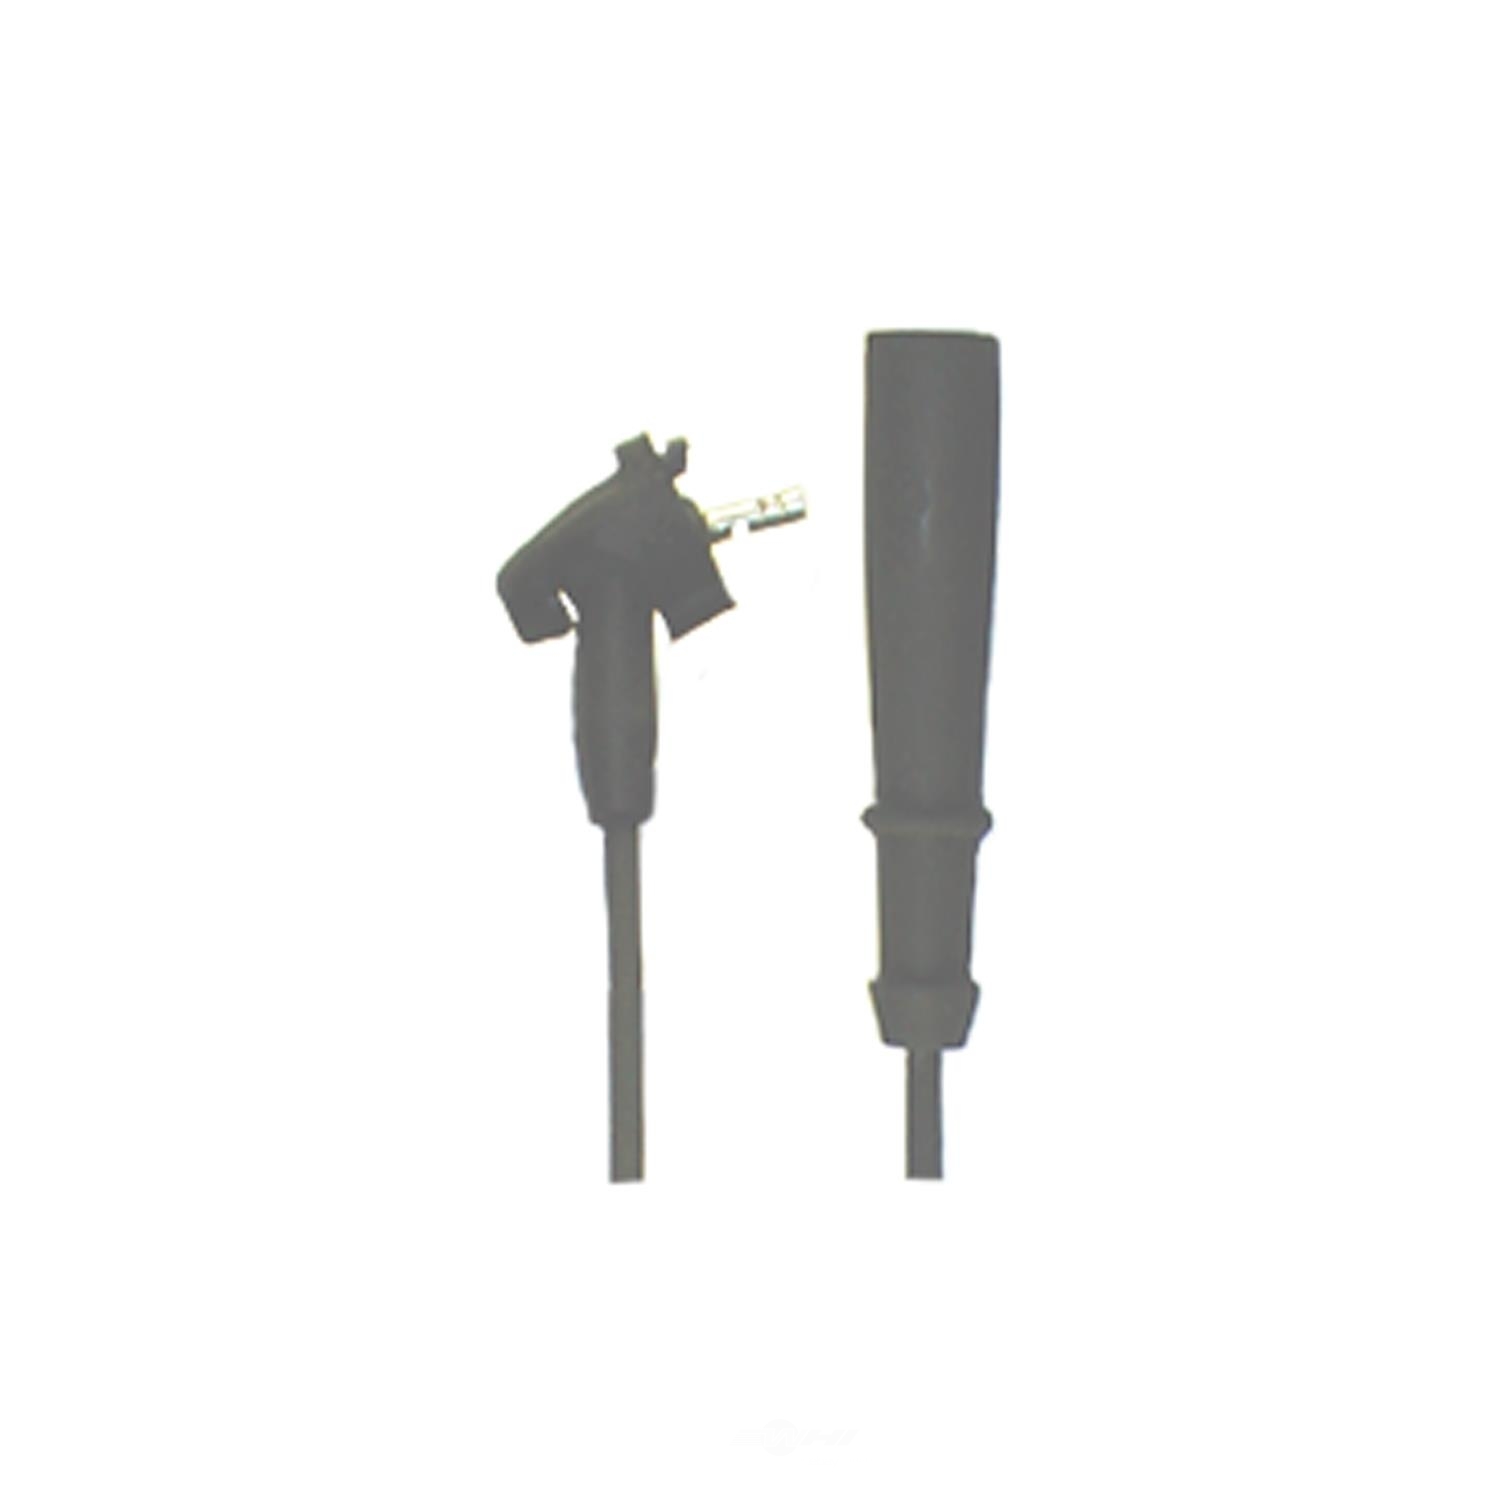 FEDERAL PARTS CORP. - Spark Plug Wire Set - FPC 6319